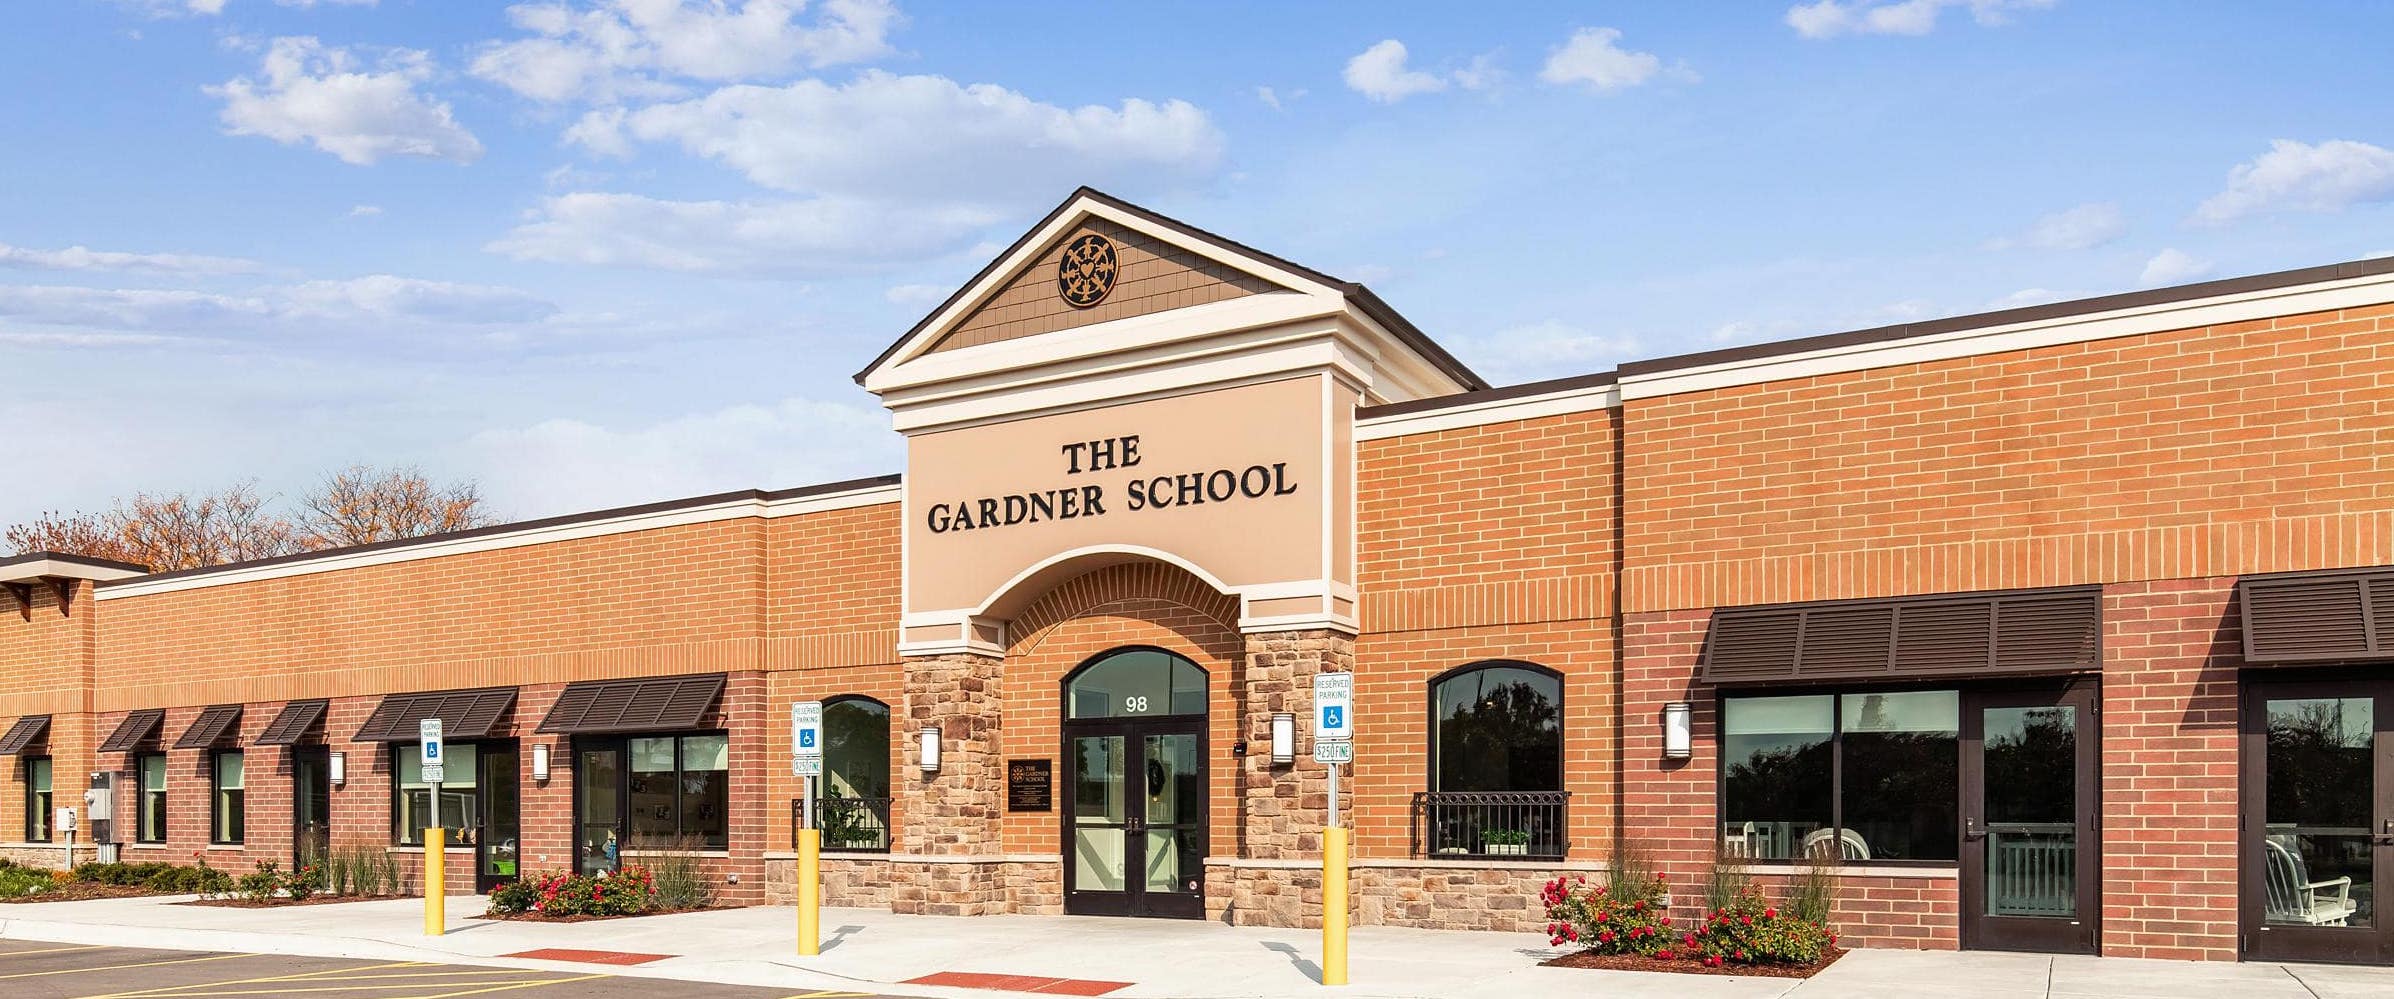 The Gardner School at Yorktown Center in Lombard, IL